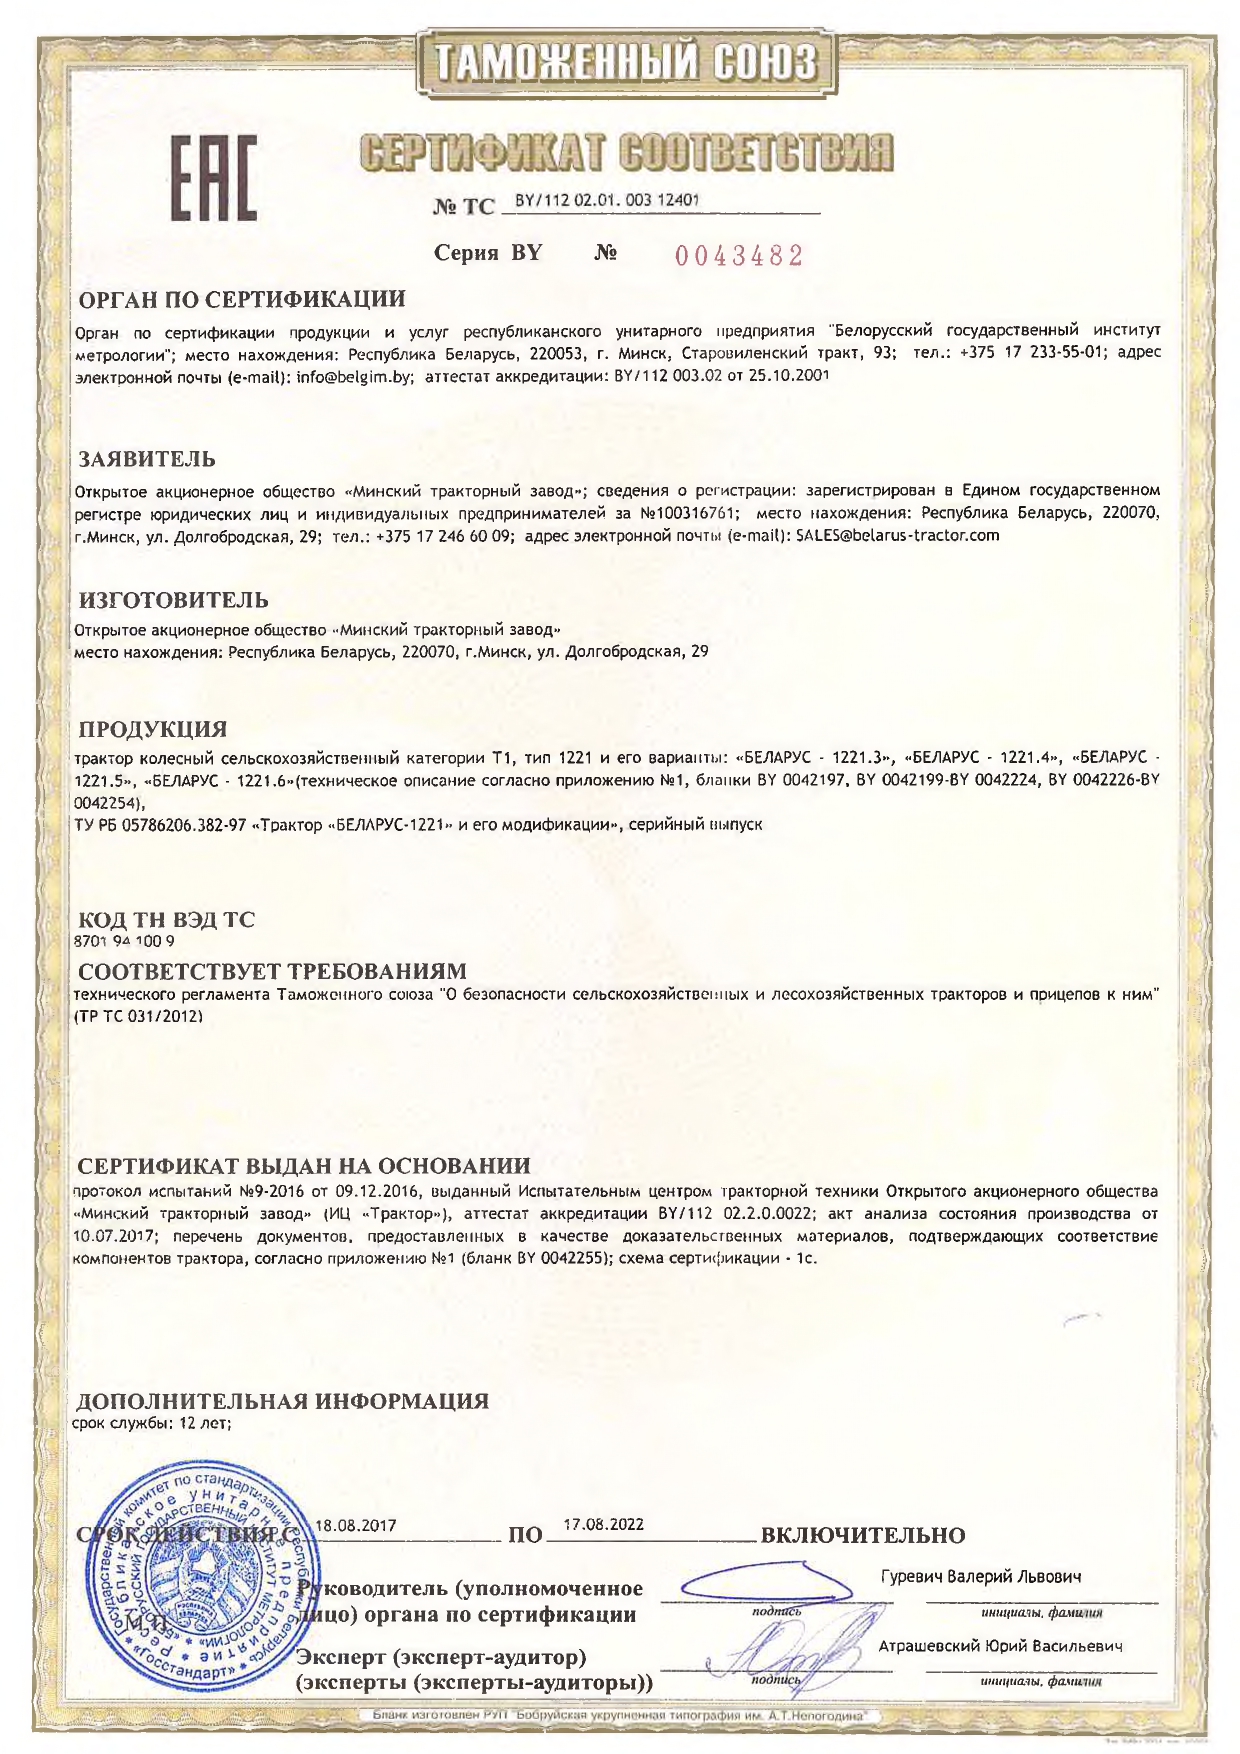 Сертификат соответсвия Беларус 1221